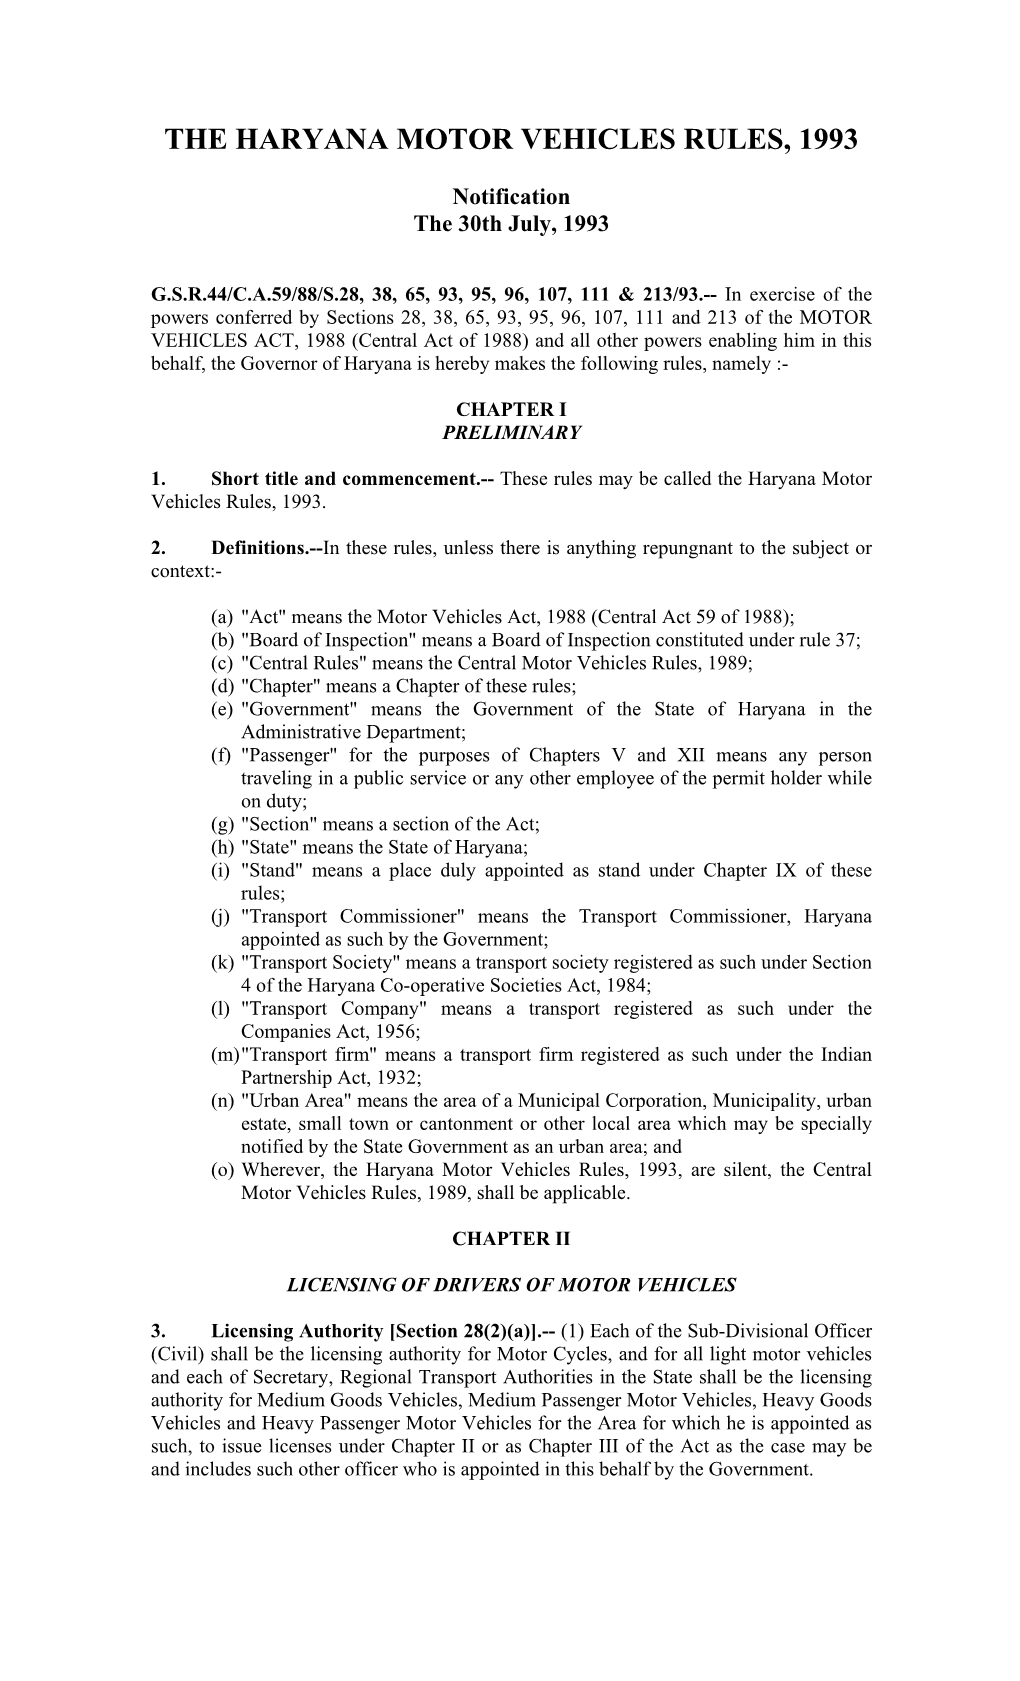 The Haryana Motor Vehicles Rules, 1993